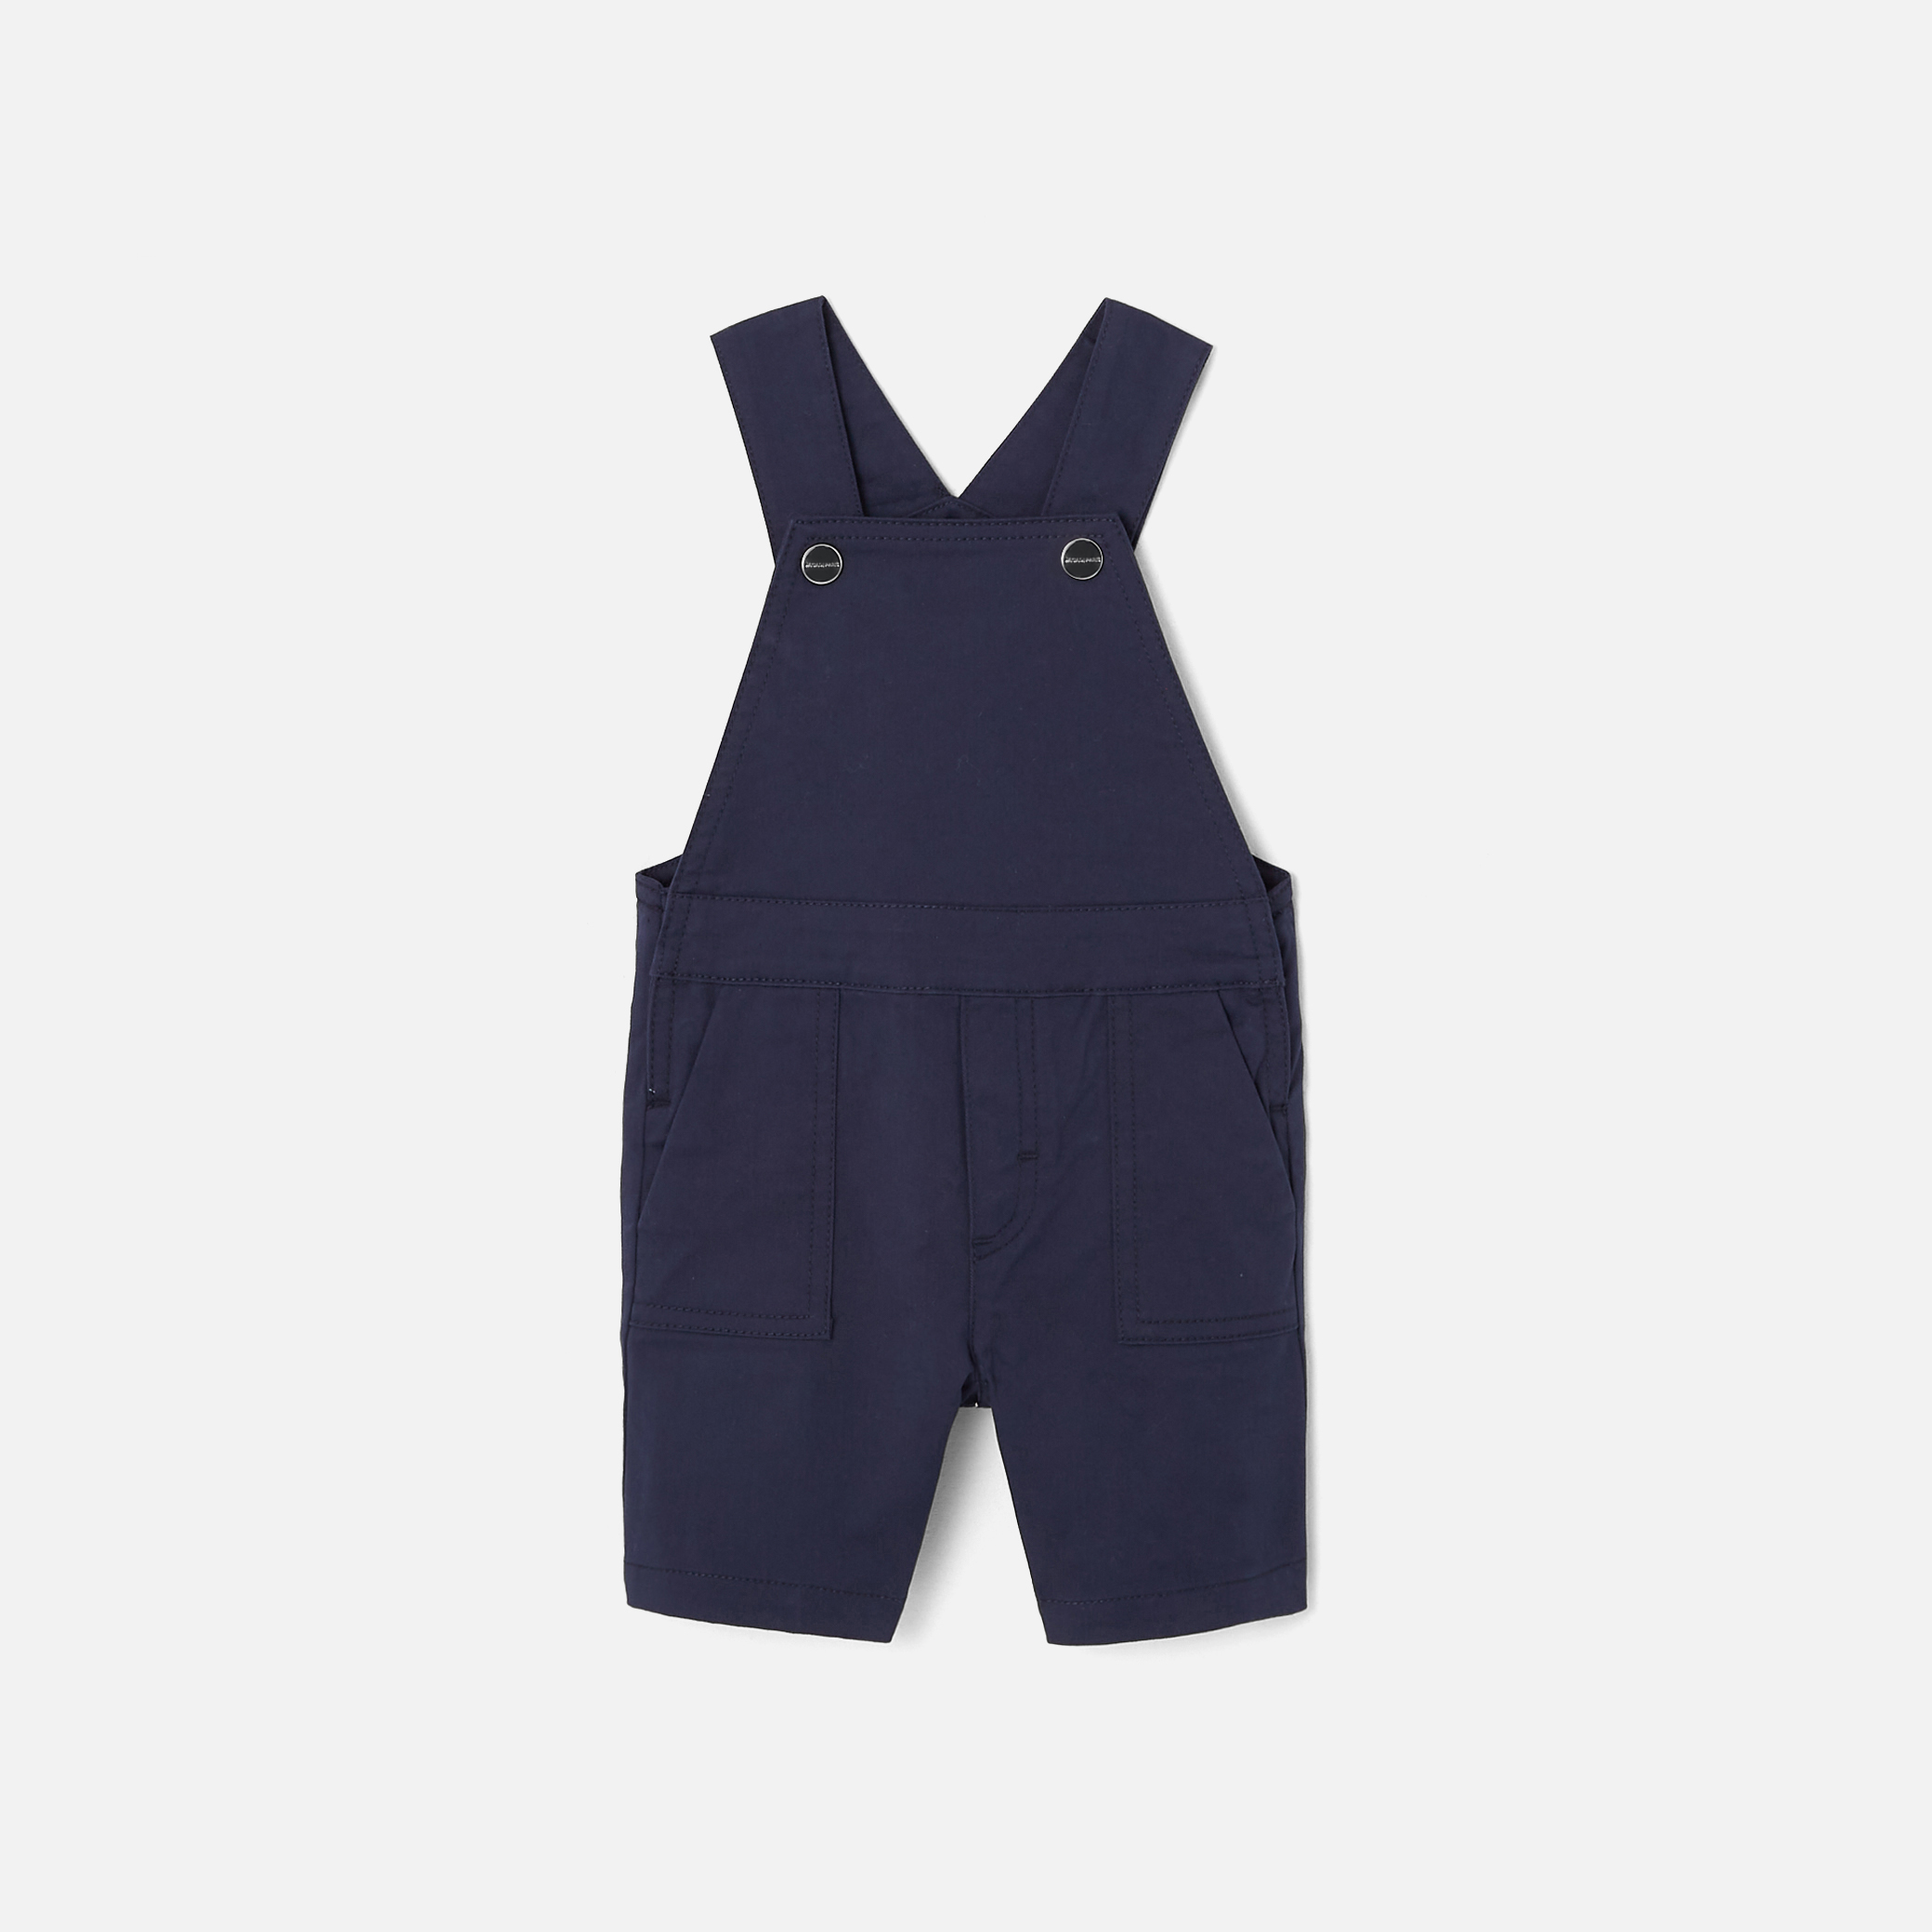 Toddler boy short overalls